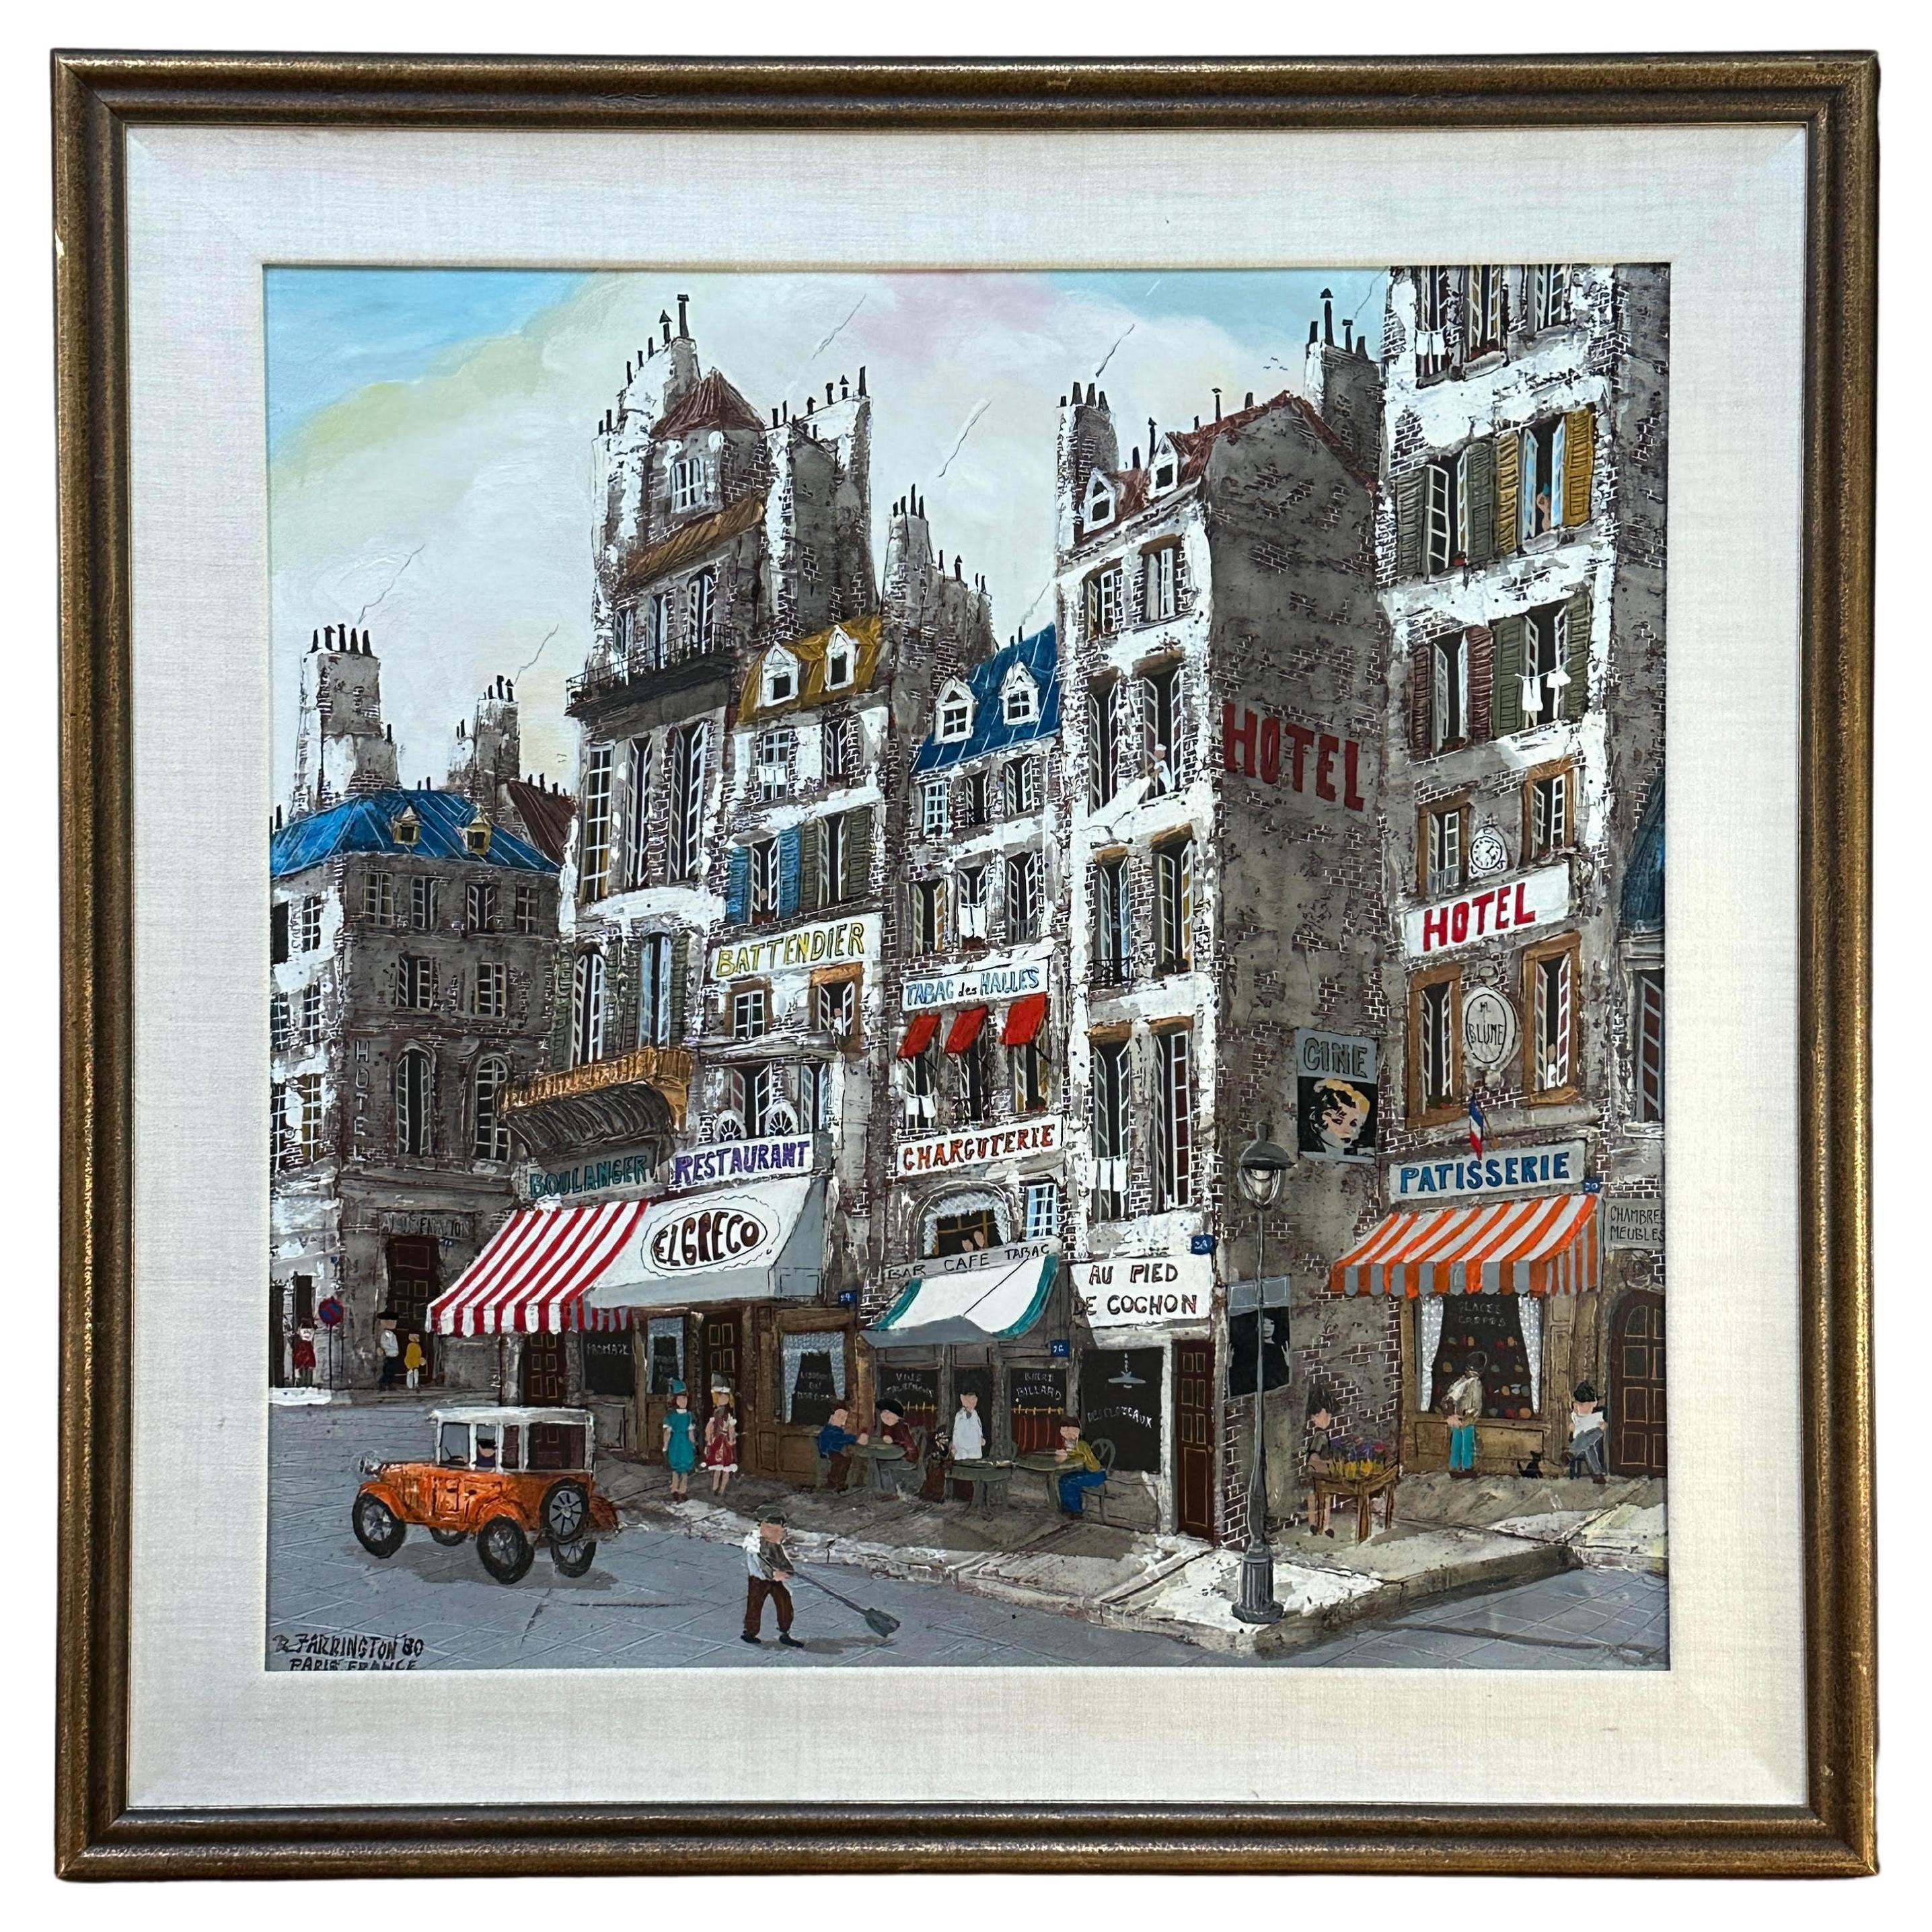 Robert David Farrington Landscape Painting - "Parisian Street", Cityscape Oil on Canvas by Robert Farrington